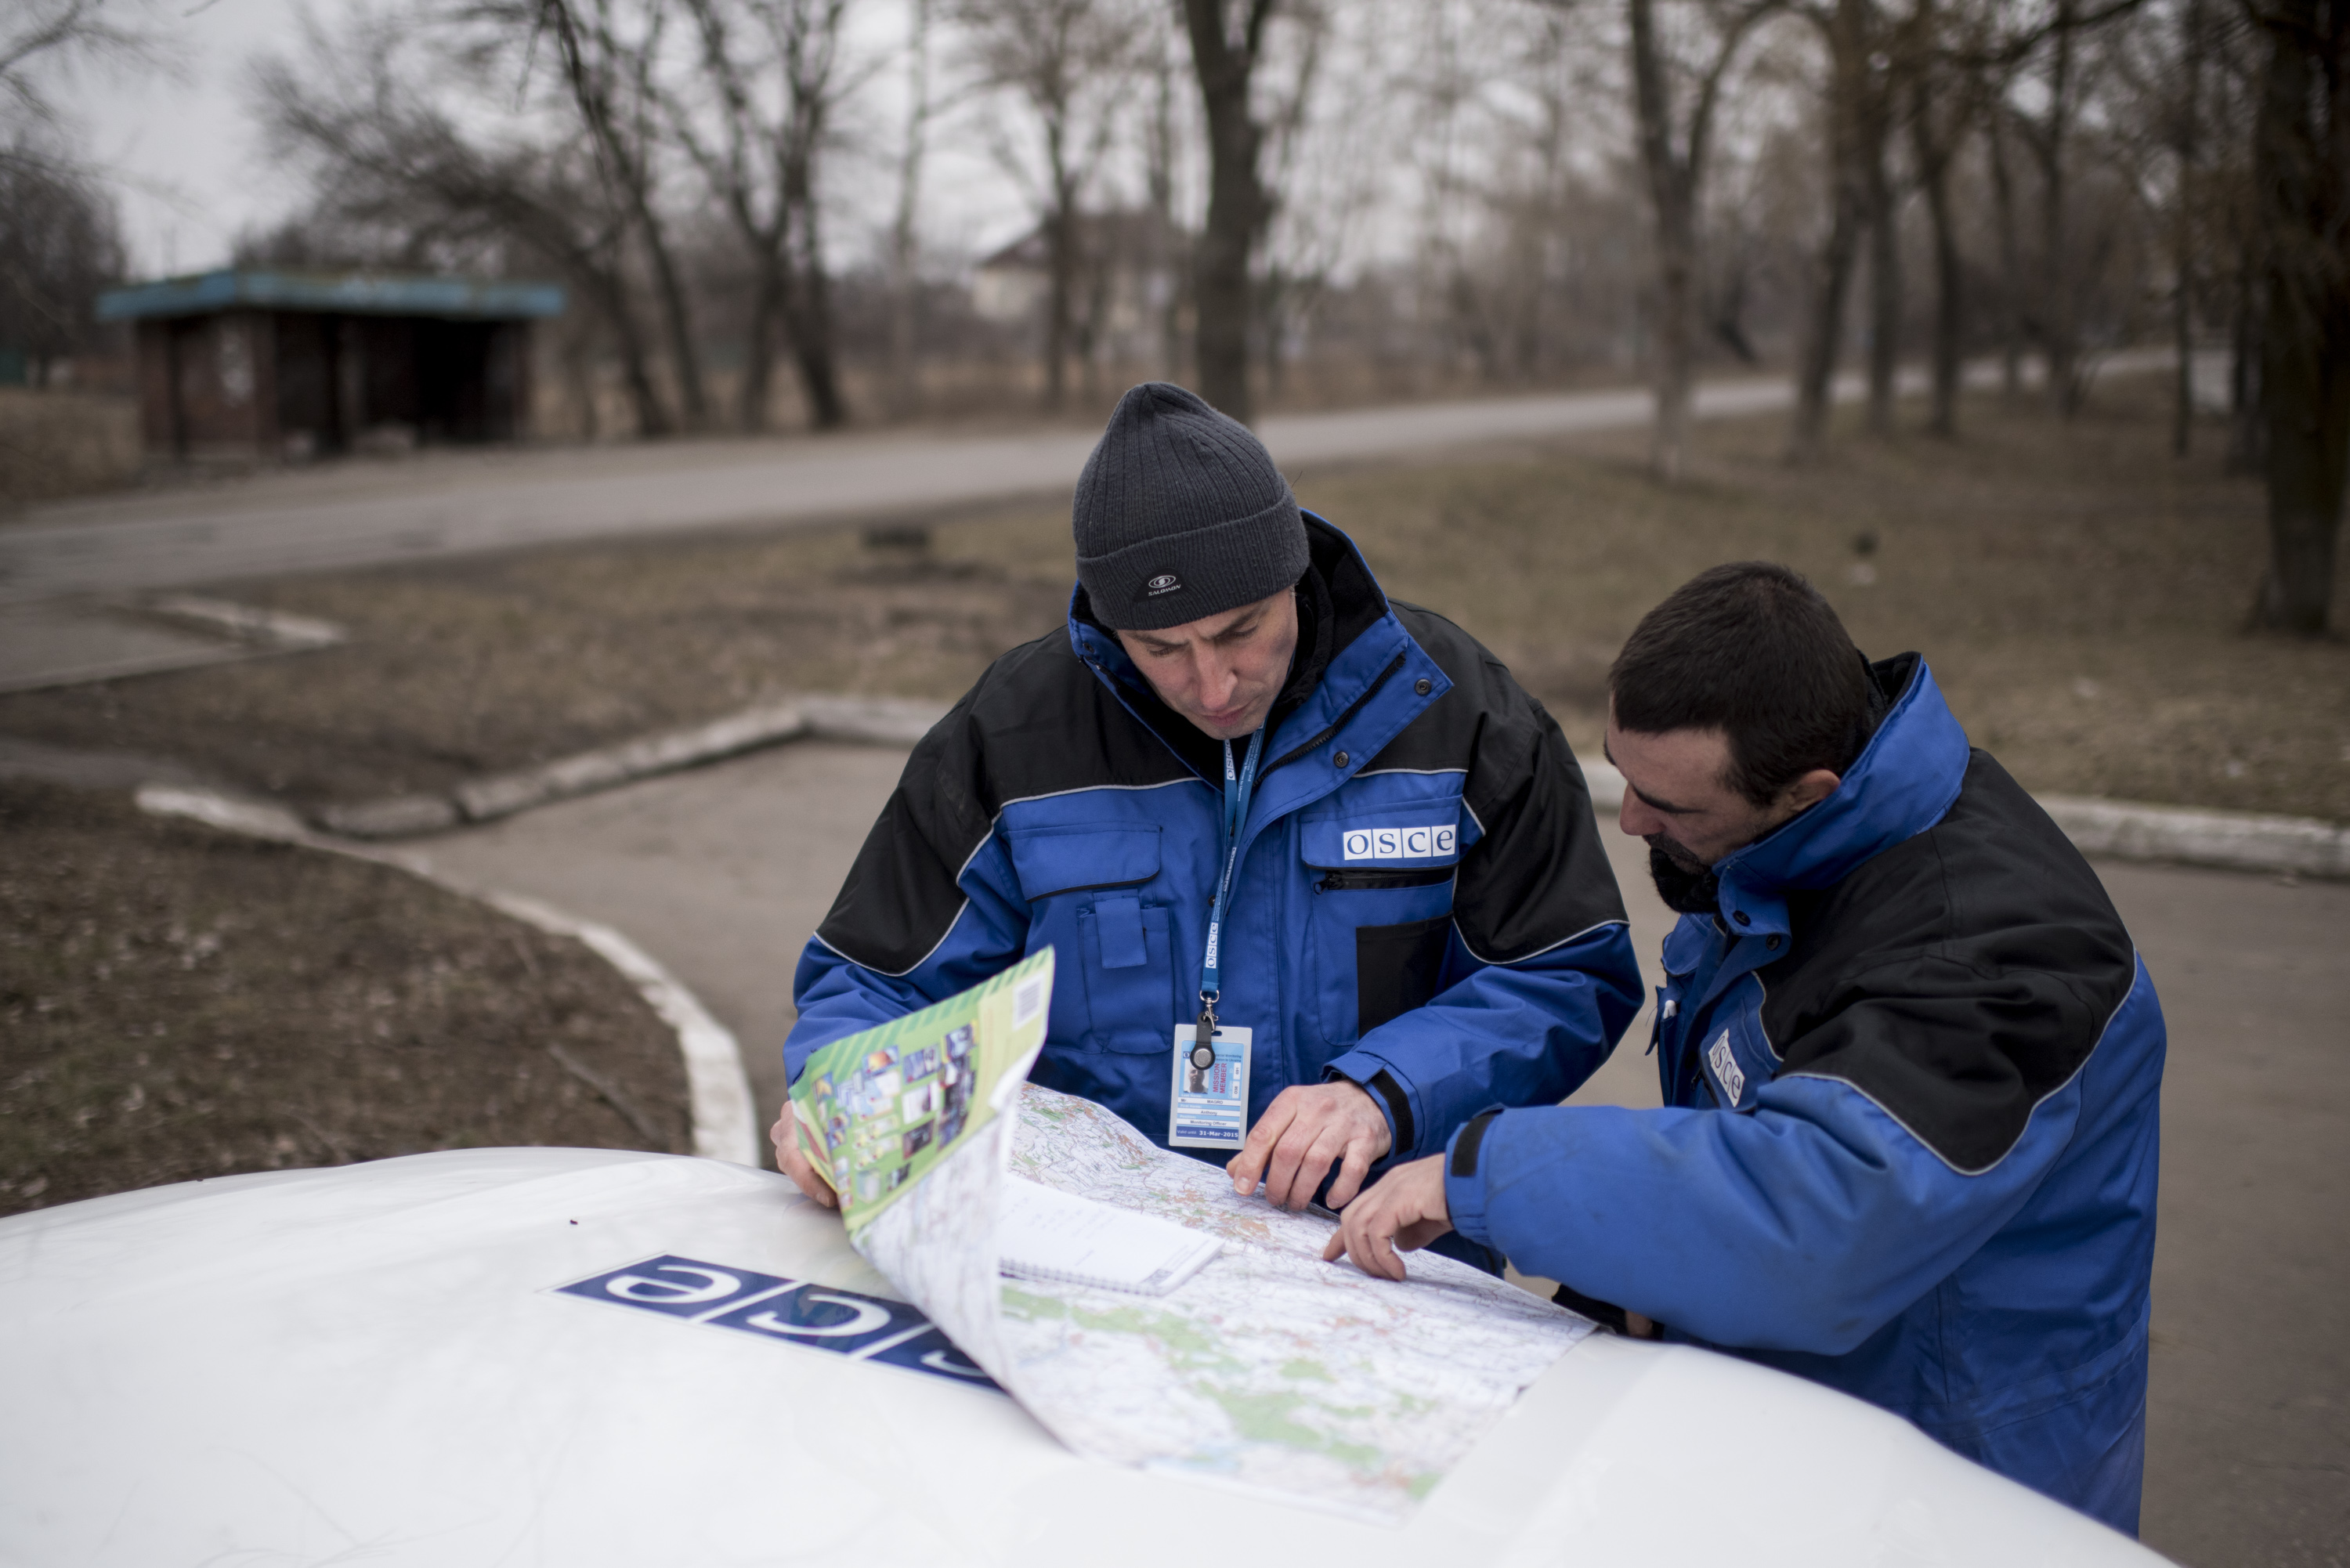 OSCE monitors reading their map on a car bonnet